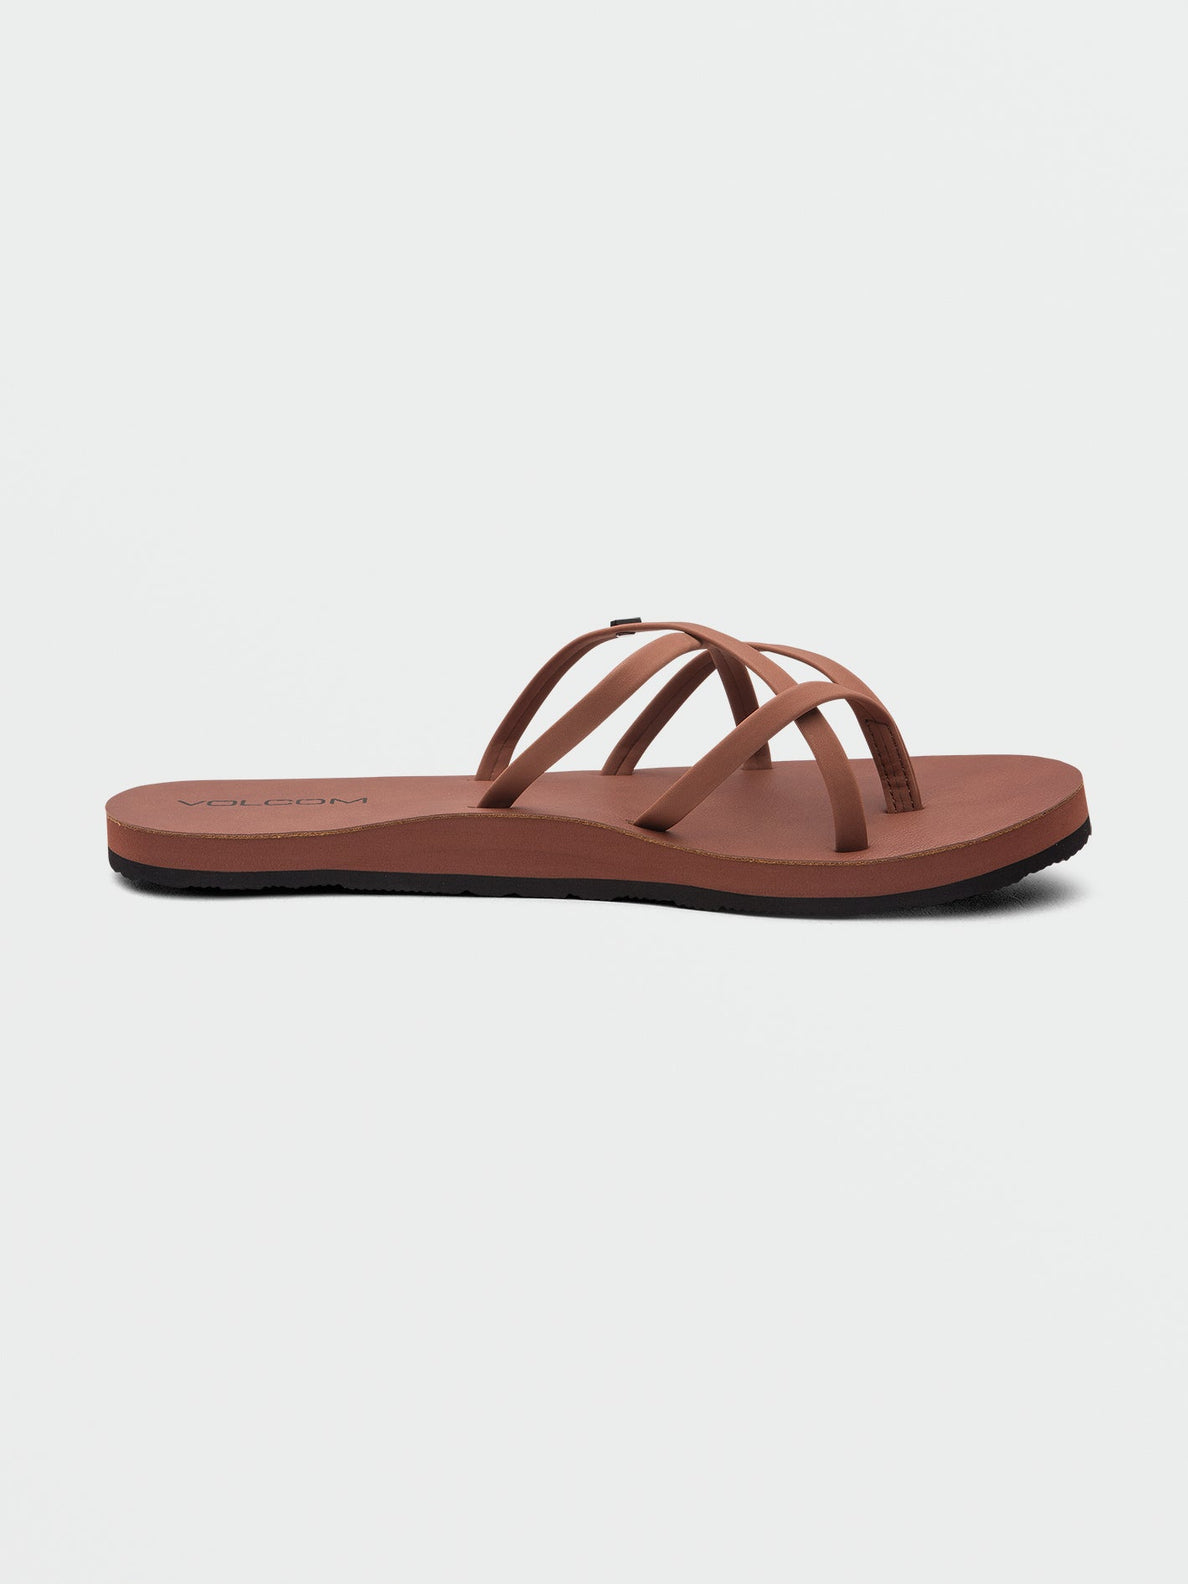 New School Ii Sandals - DARK CLAY (W0812351_DCL) [2]